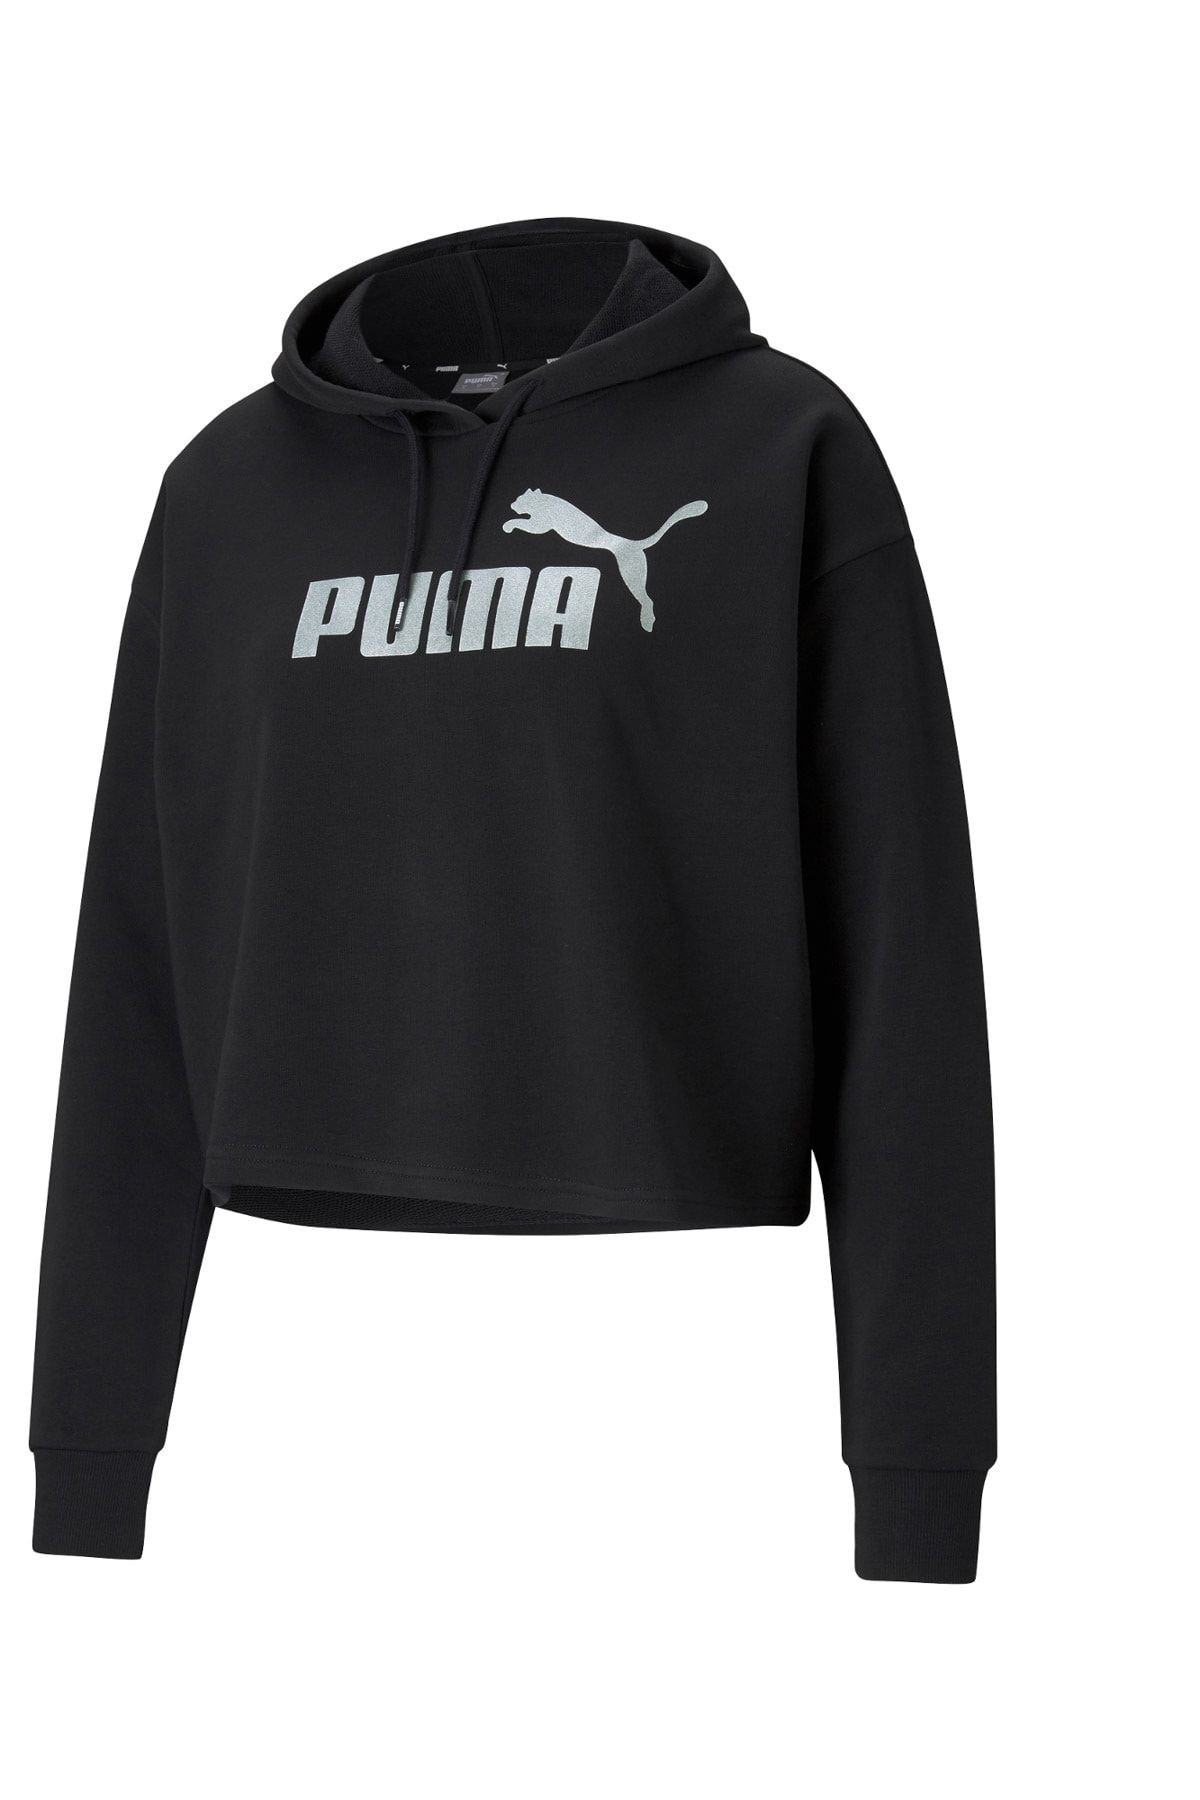 Puma Kadın Siyah Uzun Kollu  Sweatshirt